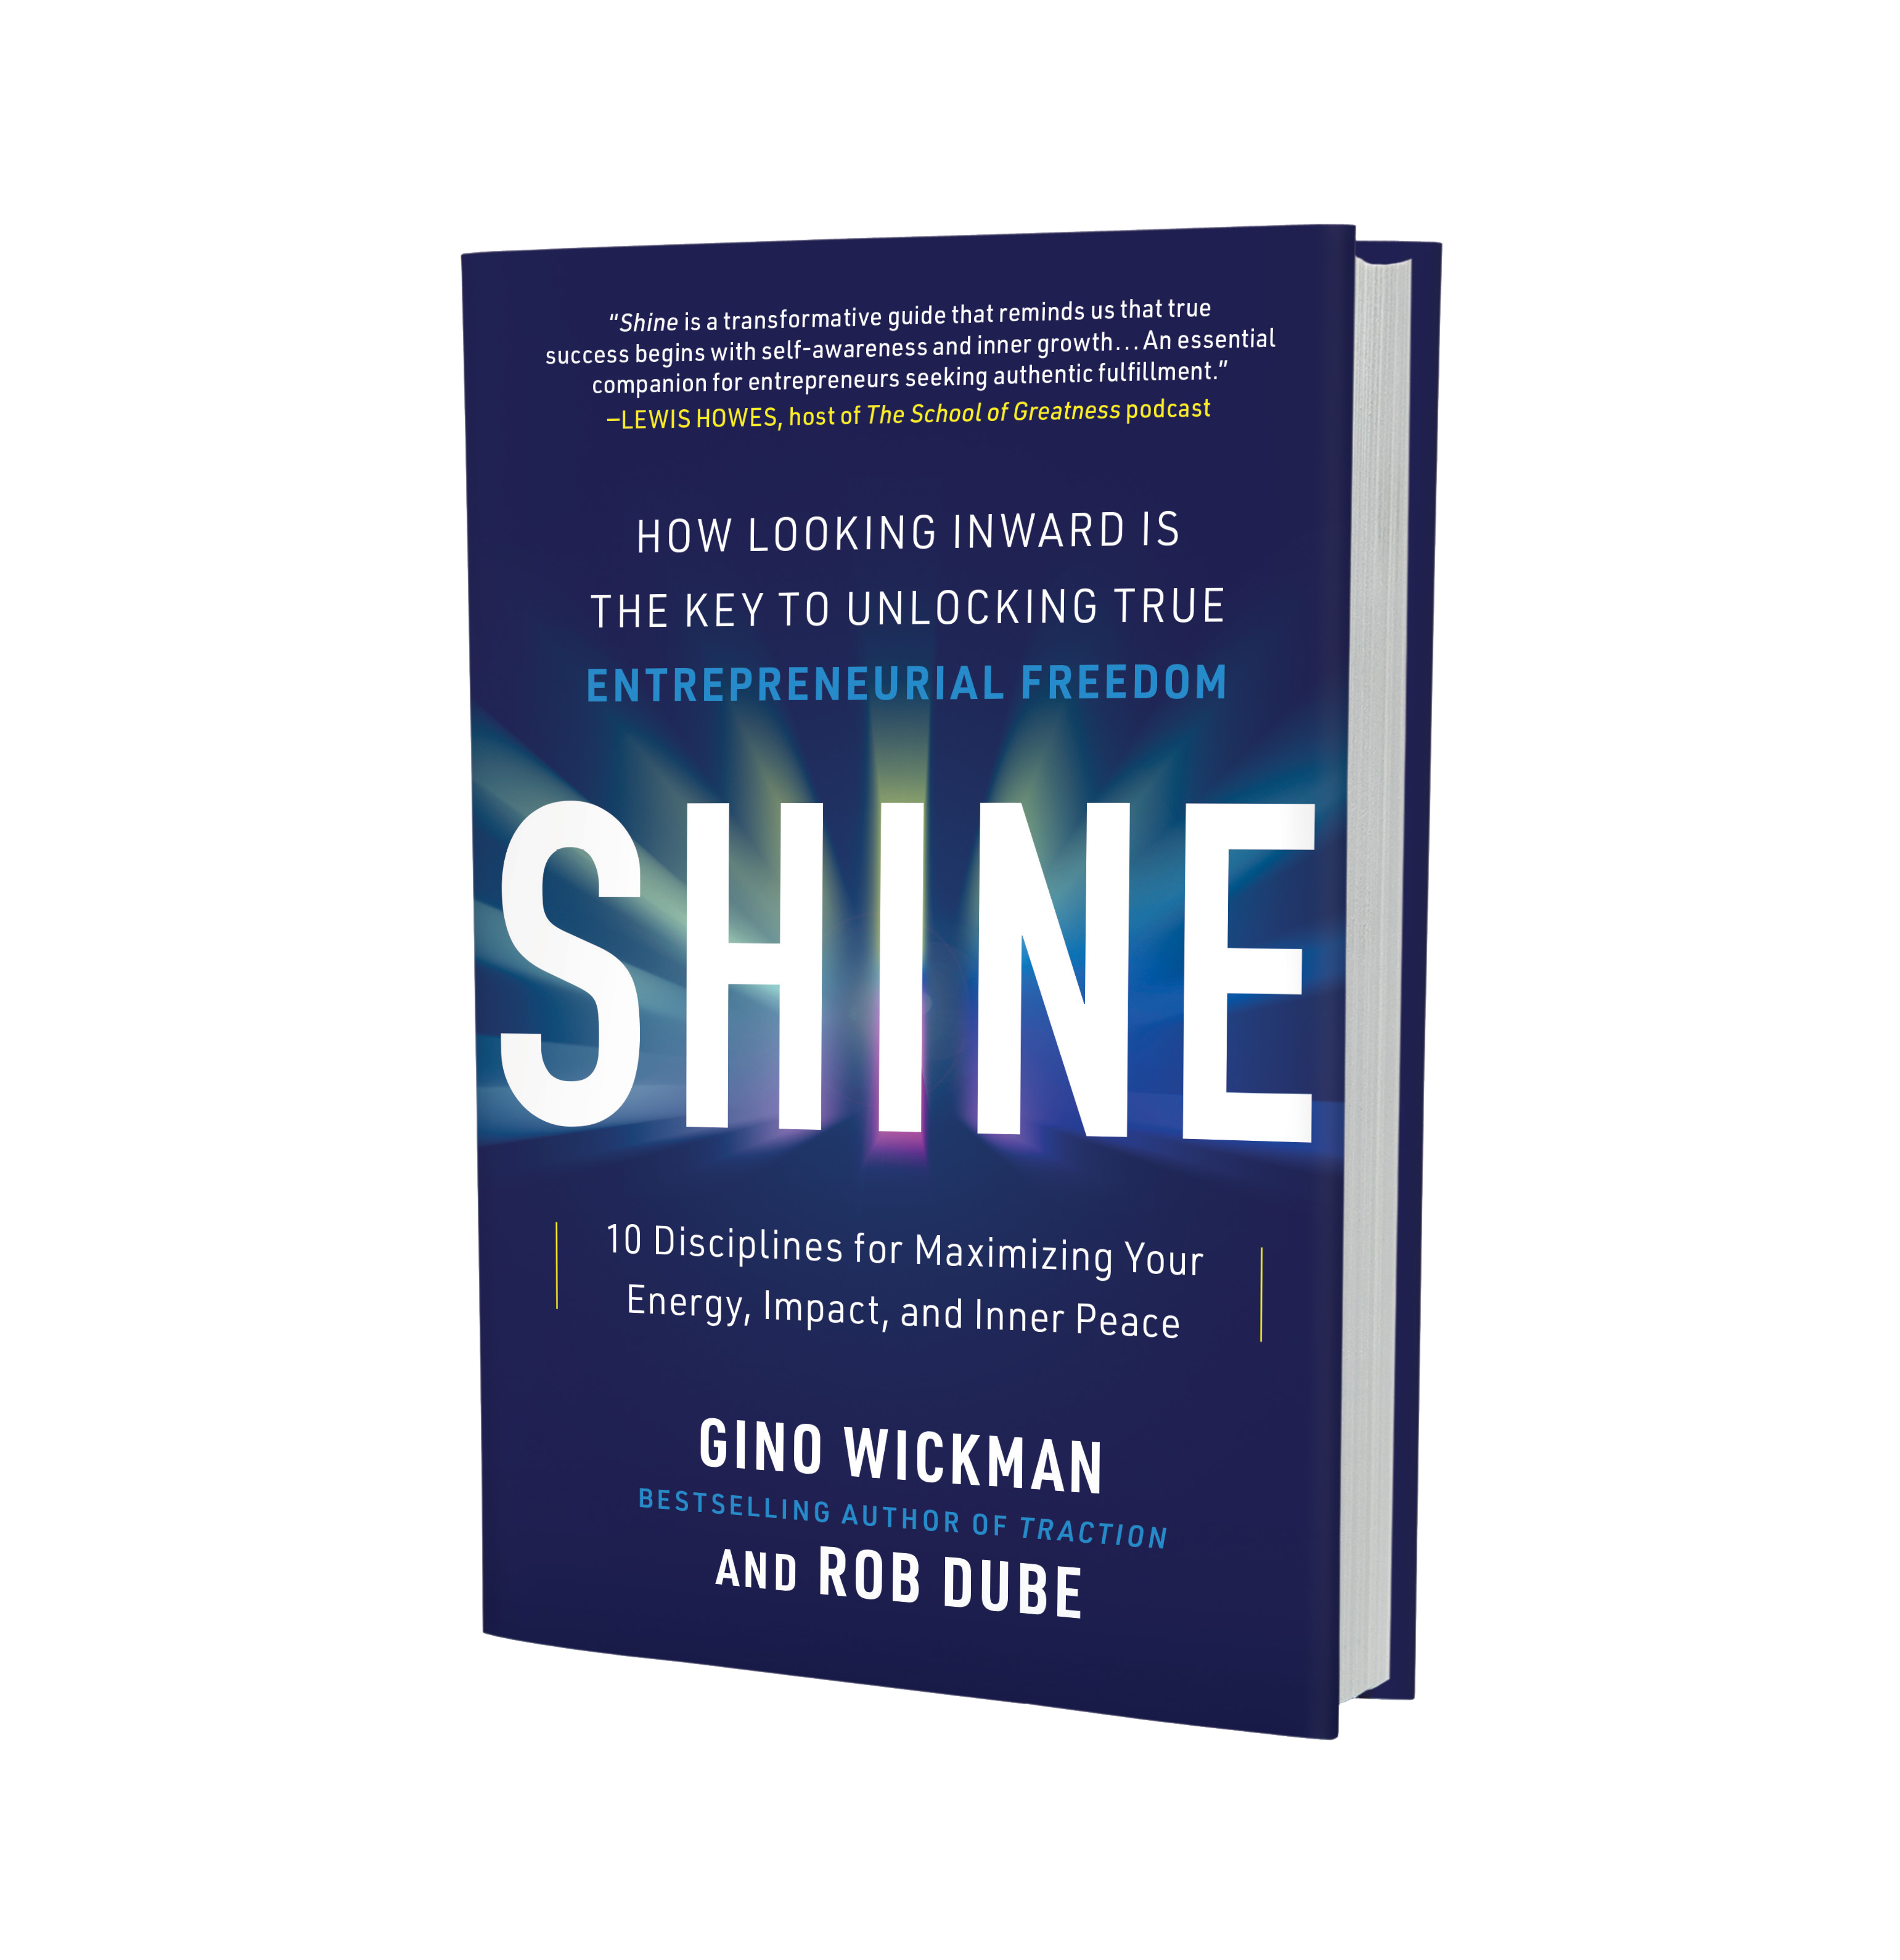 Shine by Gino Wickman and Rob Dube